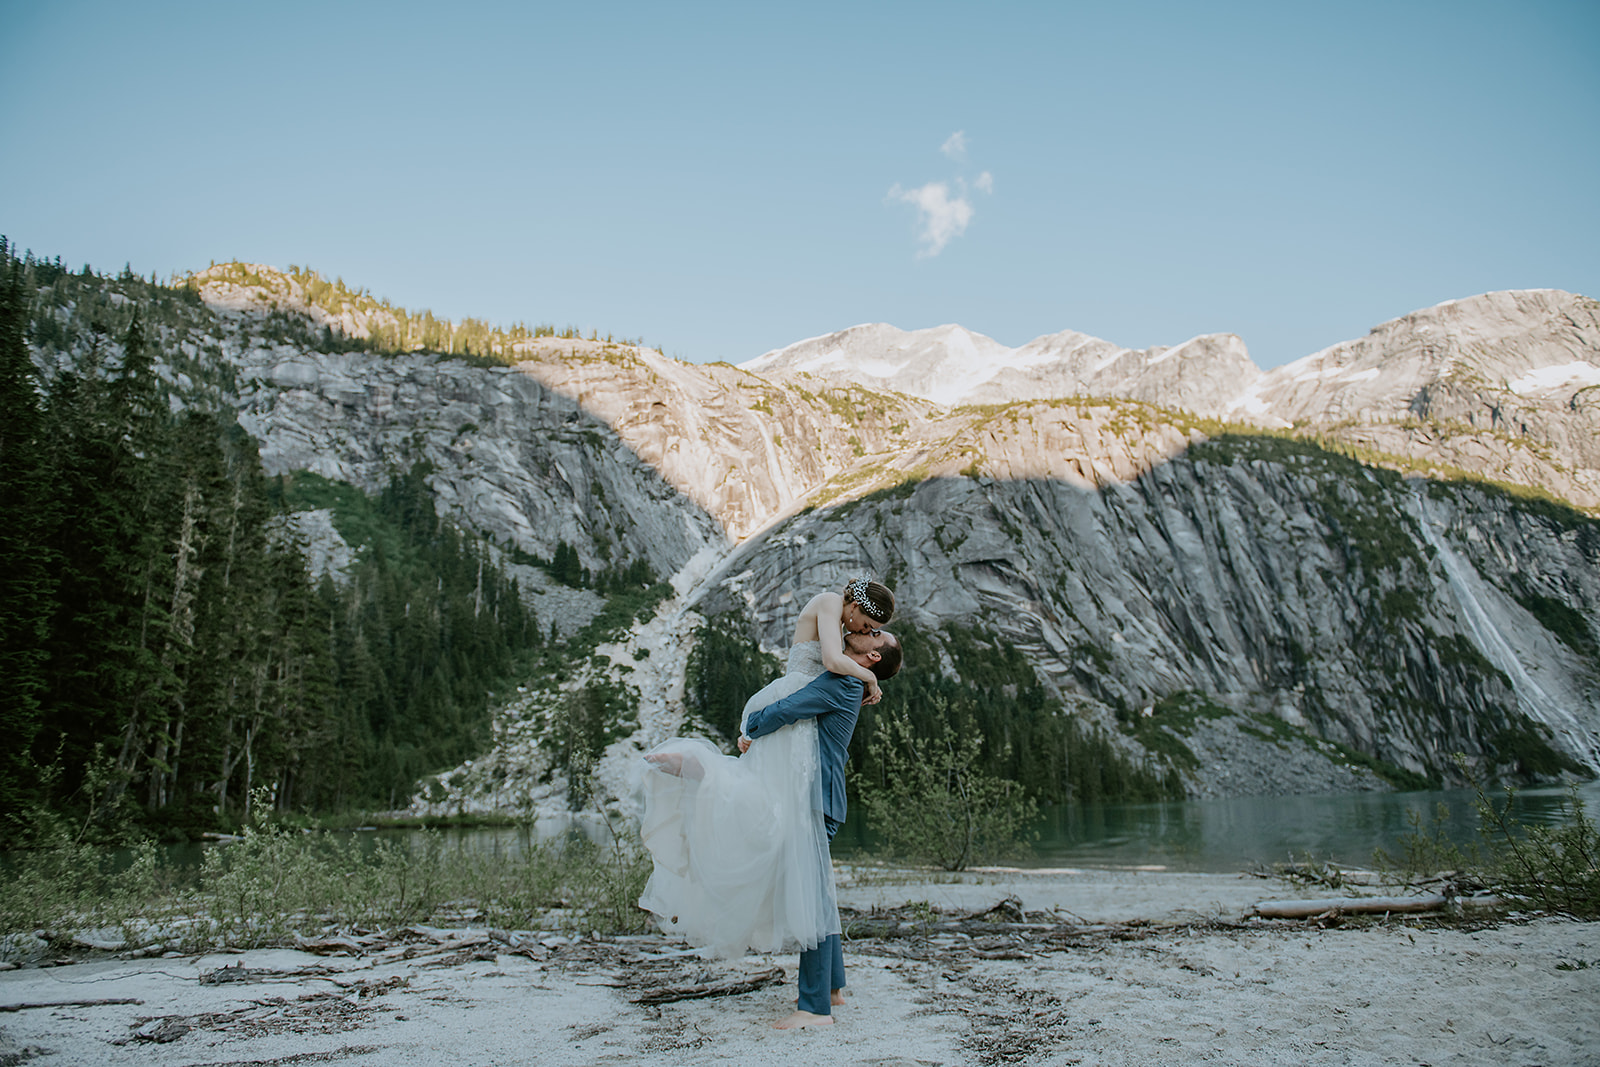 Adventure elopement couple at an Alpine glacial lake